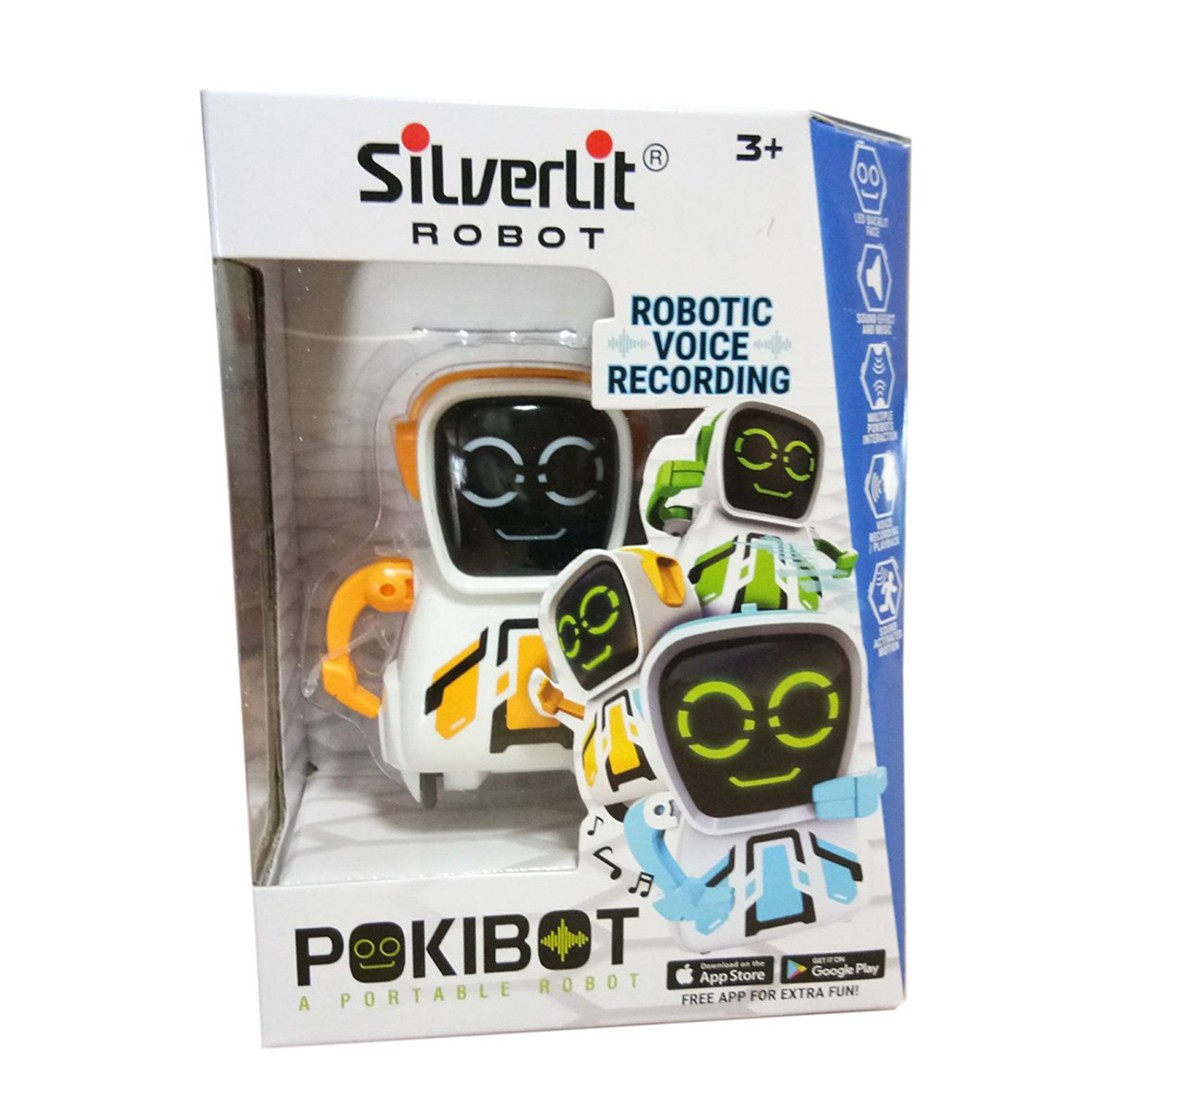 Silverlit Pokibot In 3 Colors-White/Blue/Purple Robotics for Kids age 3Y+ 